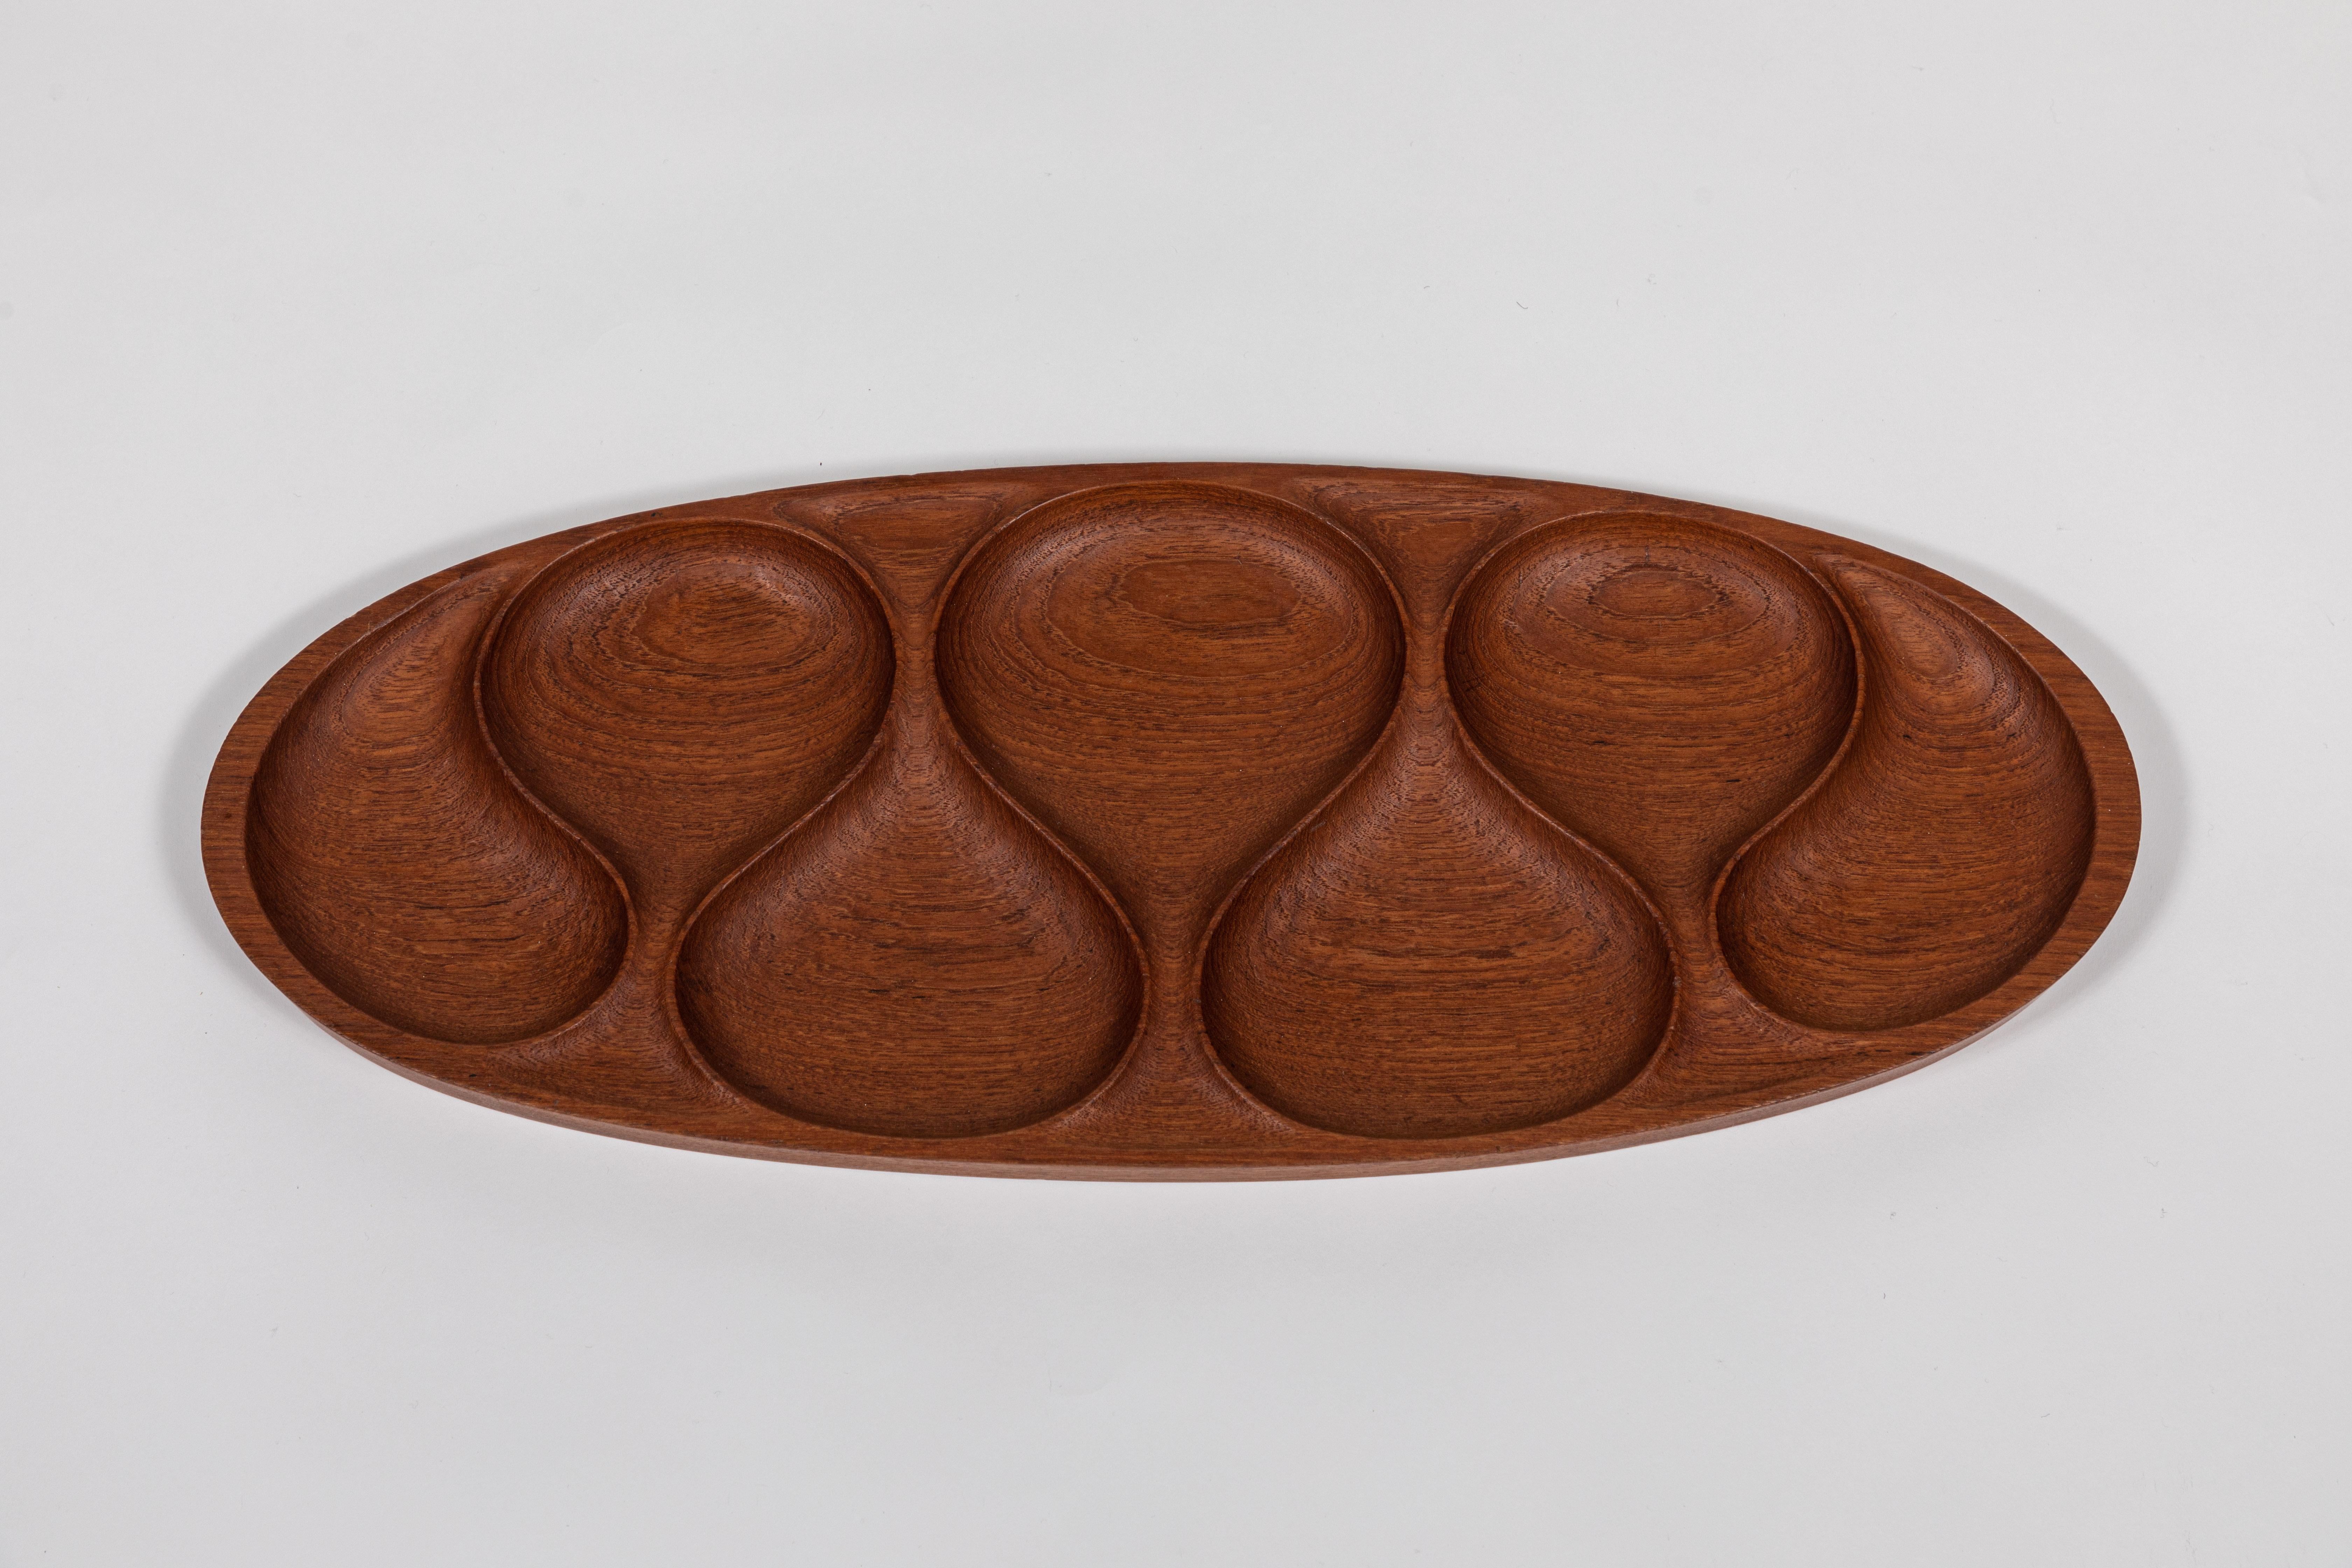 Midcentury teak wood trinket tray by Laur. Jensen for Odense, Denmark.